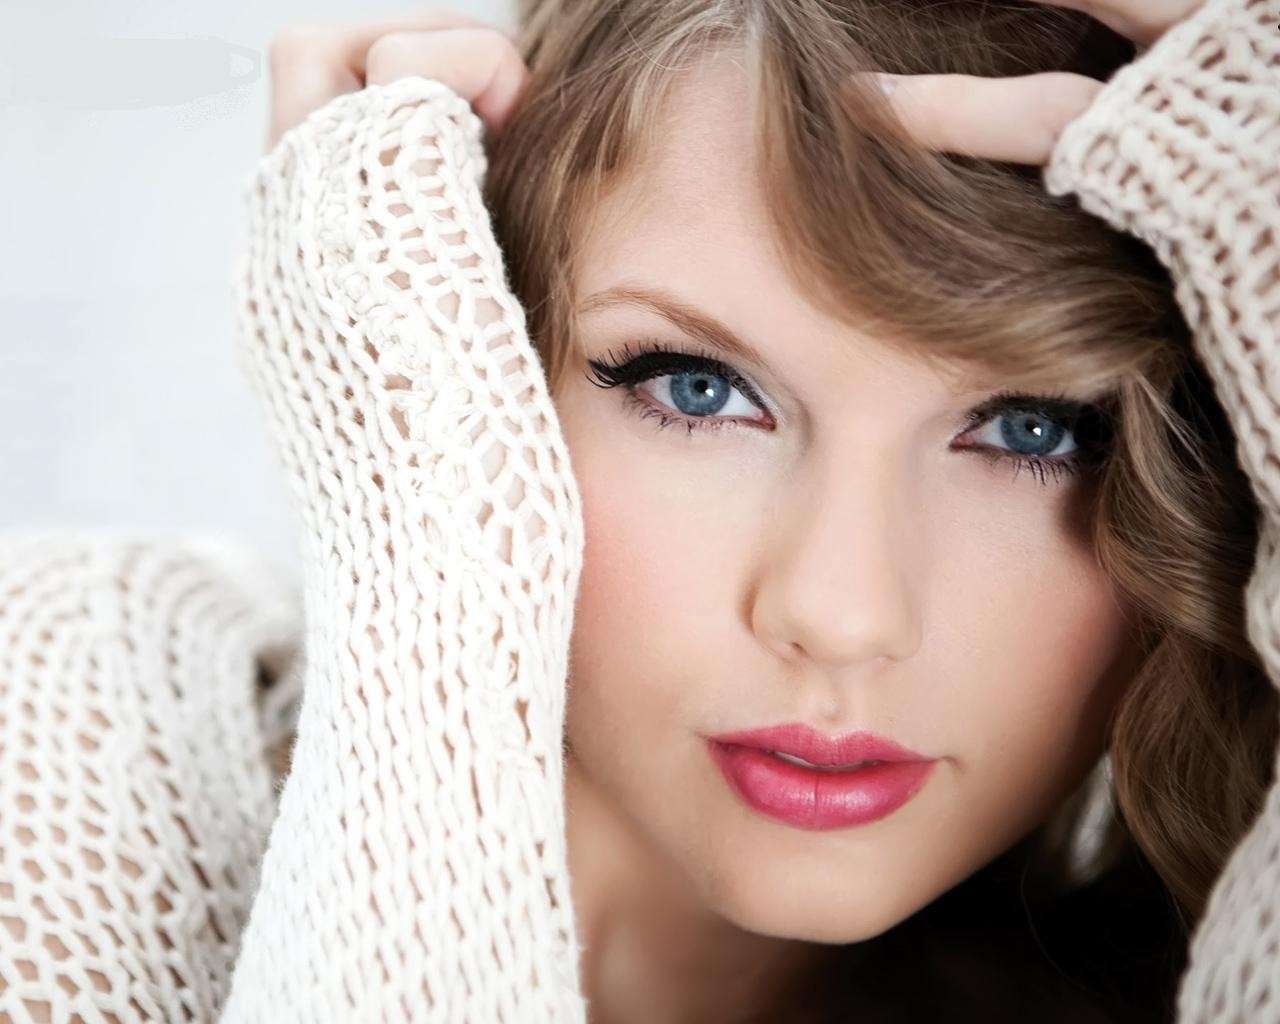 Taylor eyeliner